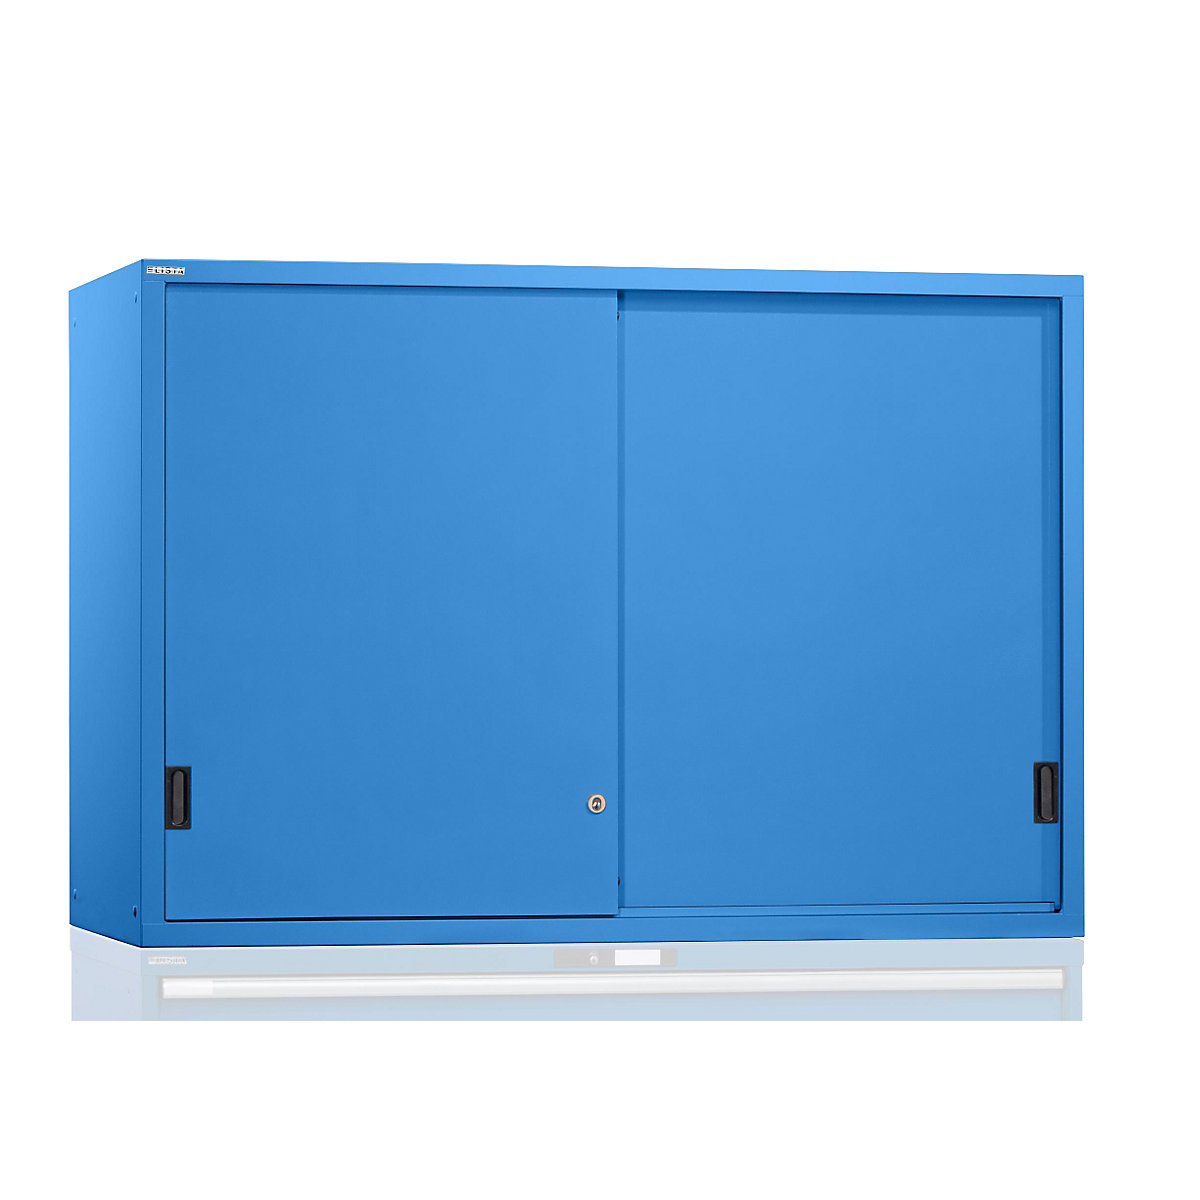 Altillo con puertas correderas – LISTA, puertas de chapa maciza, H x A x P 1000 x 1431 x 725 mm, azul luminoso-12